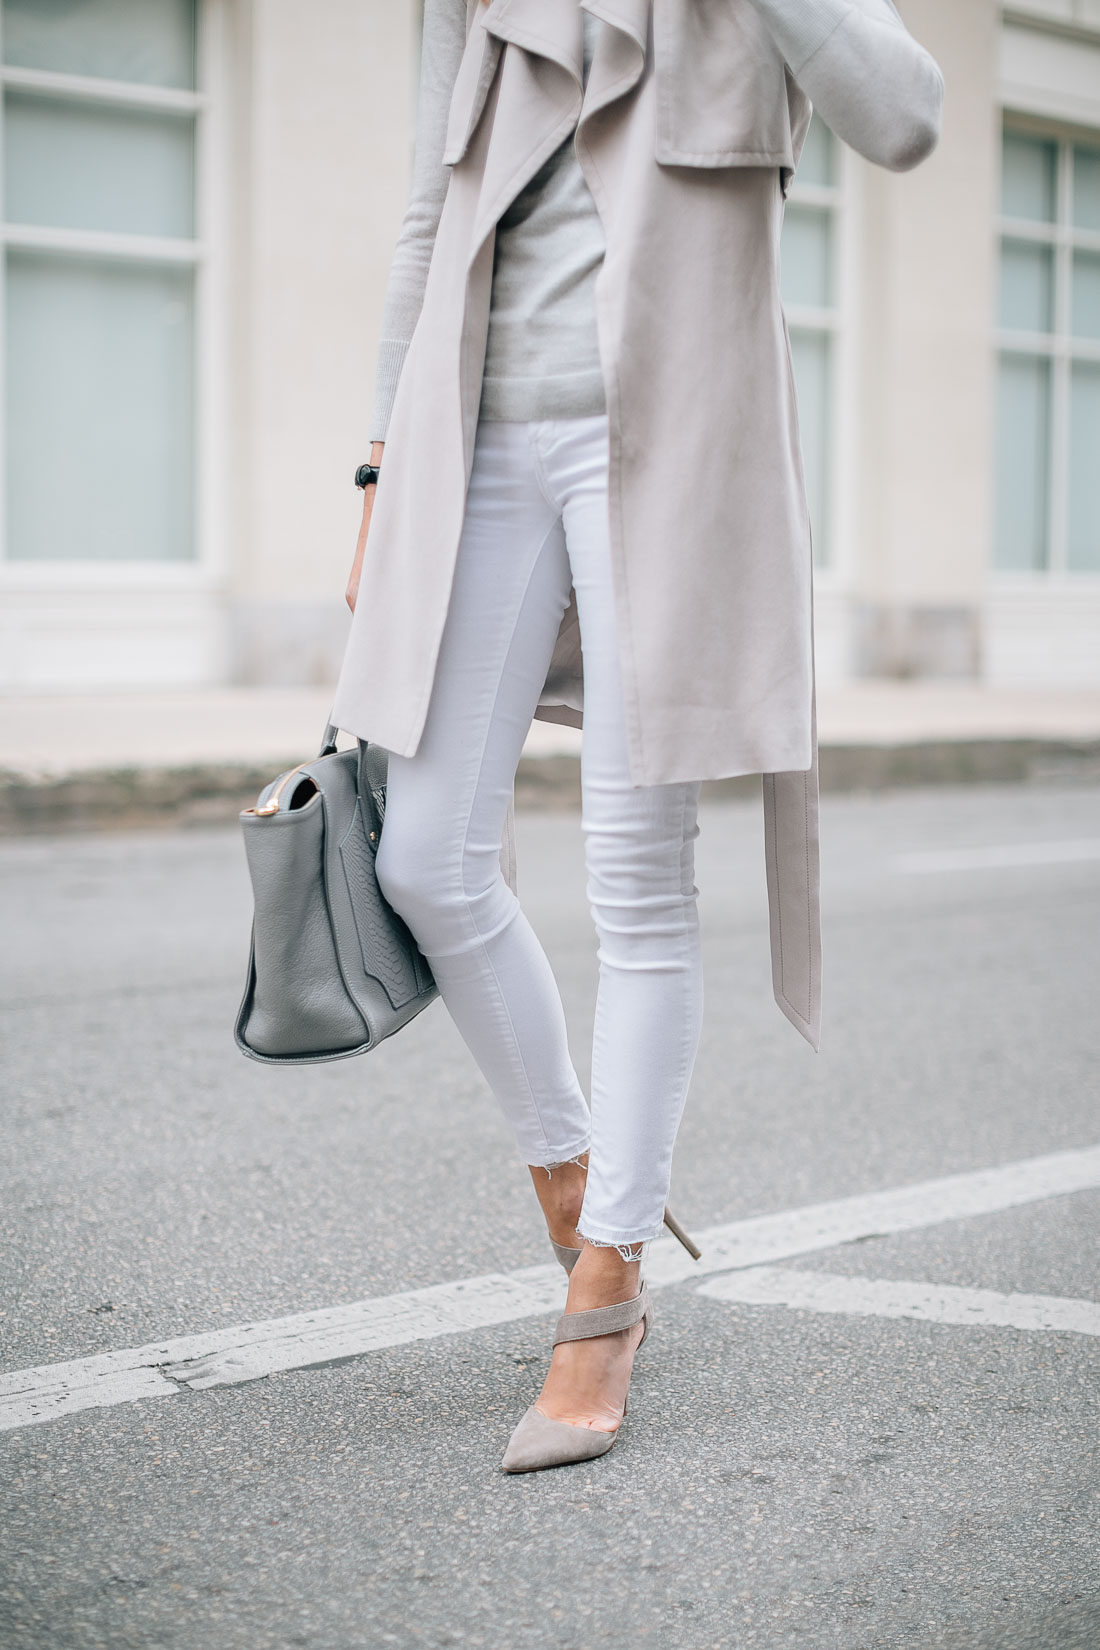 fashion-jackson-white-skinny-jeans-club-monaco-trench-vest-grey-sweater